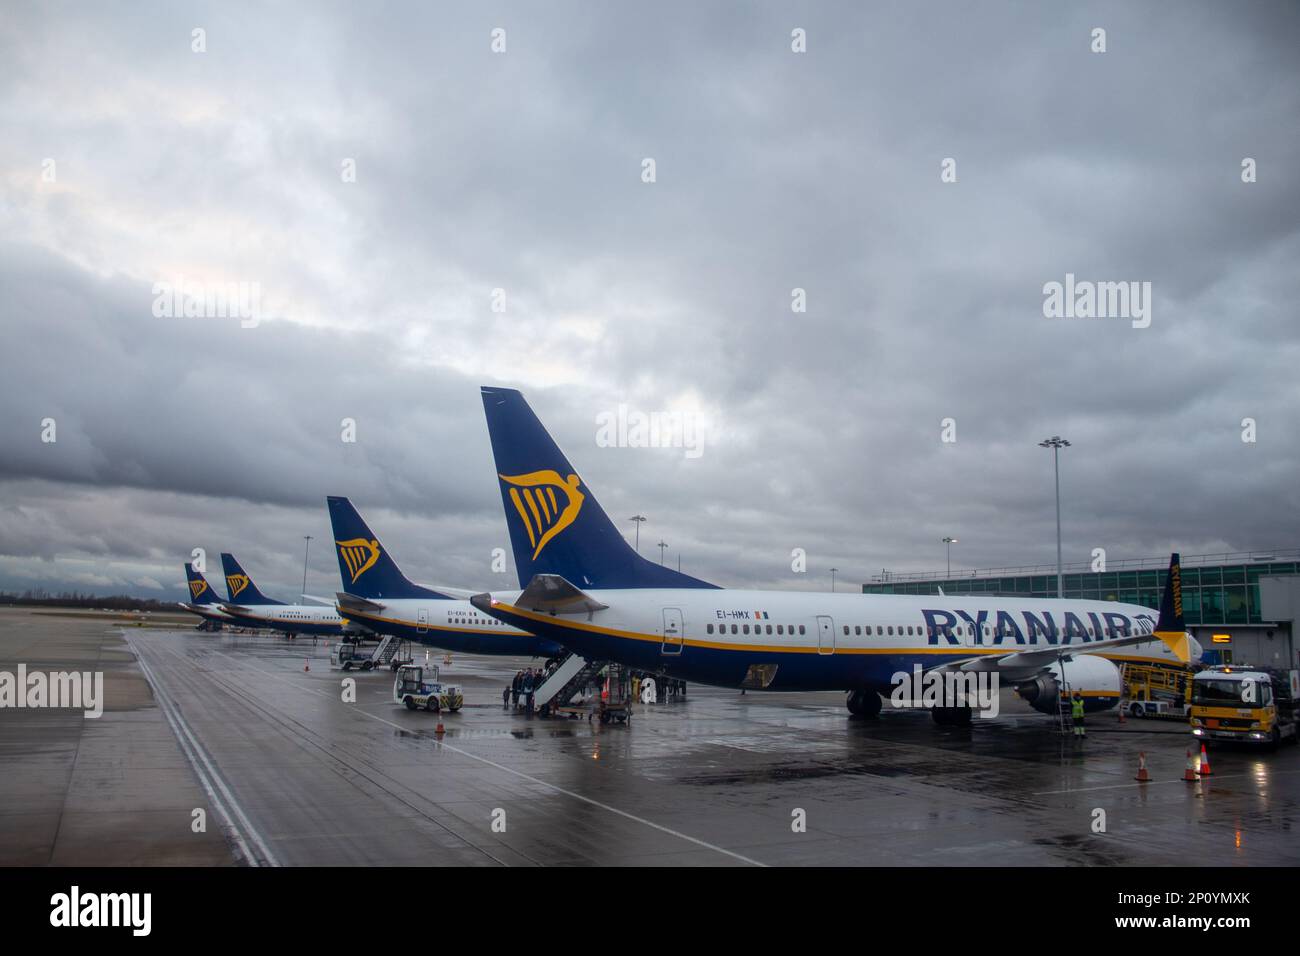 Ryan Air am Flughafen Stansted. Kredit: Sinai Noor / Alamy Stock Photo Stockfoto